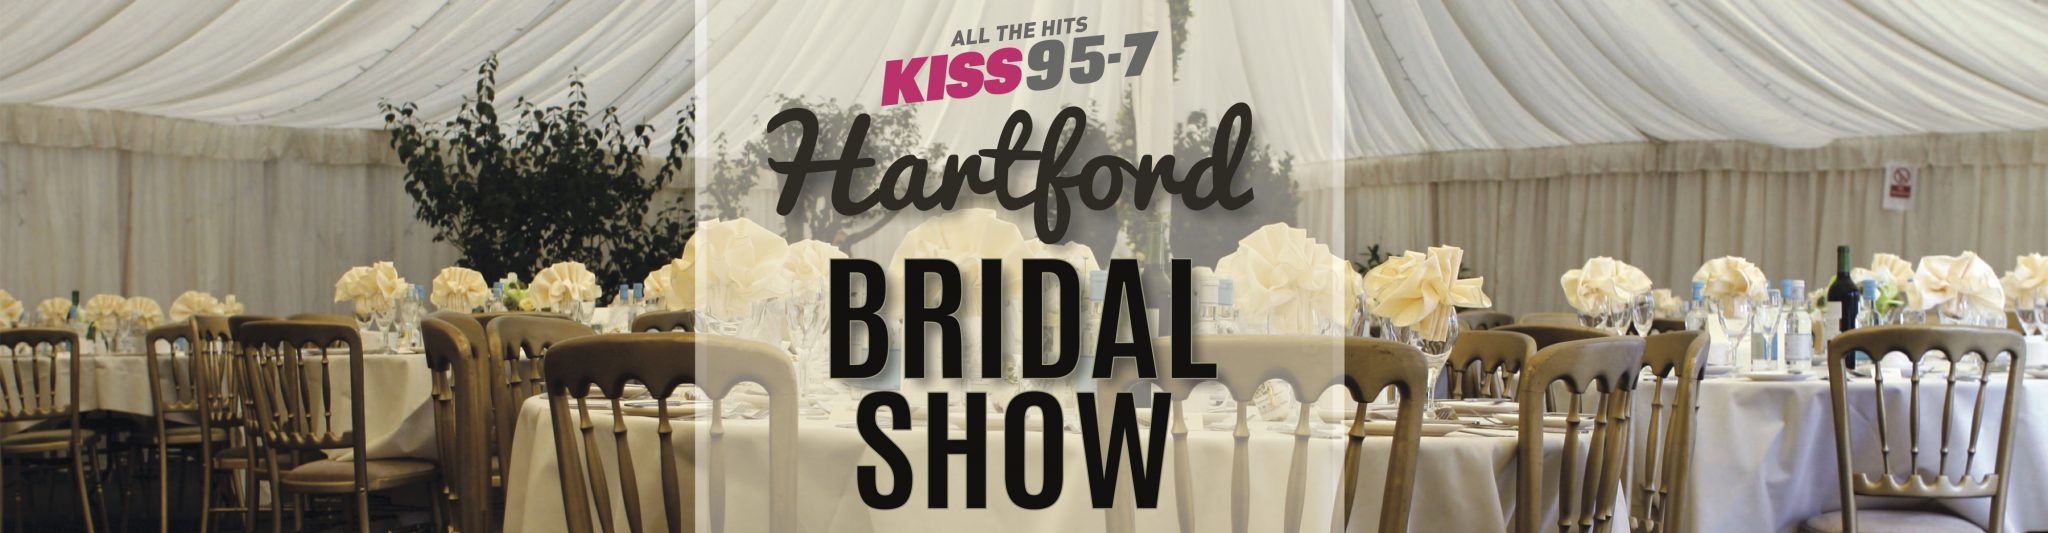 Annual Hartford Bridal & Wedding Expo at the XL Center